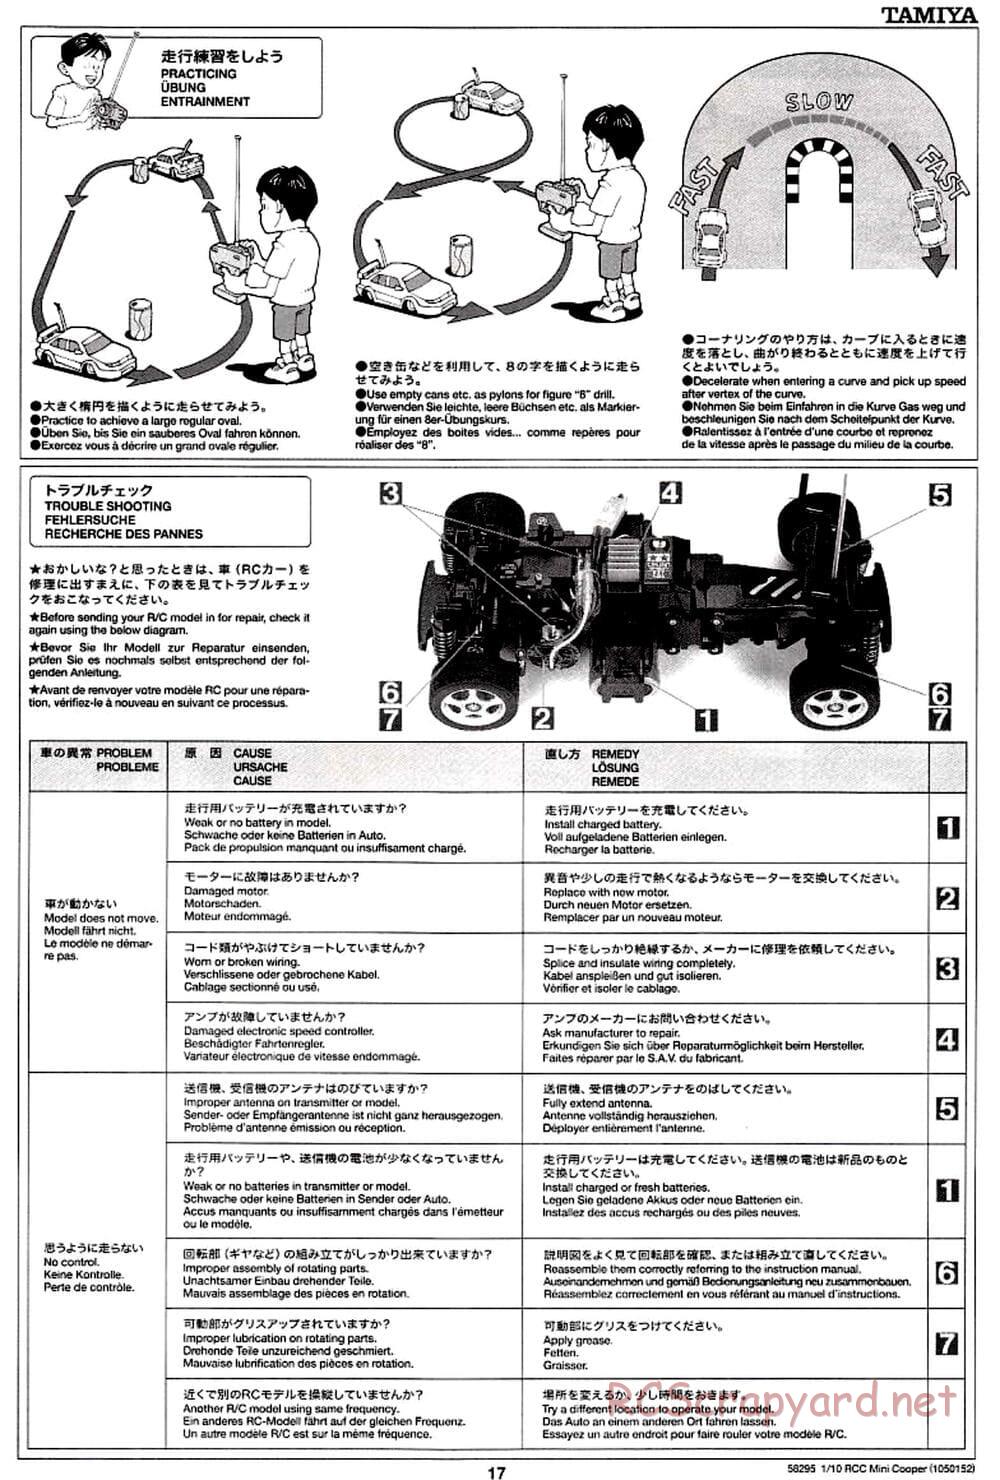 Tamiya - Mini Cooper - M03L Chassis - Manual - Page 16